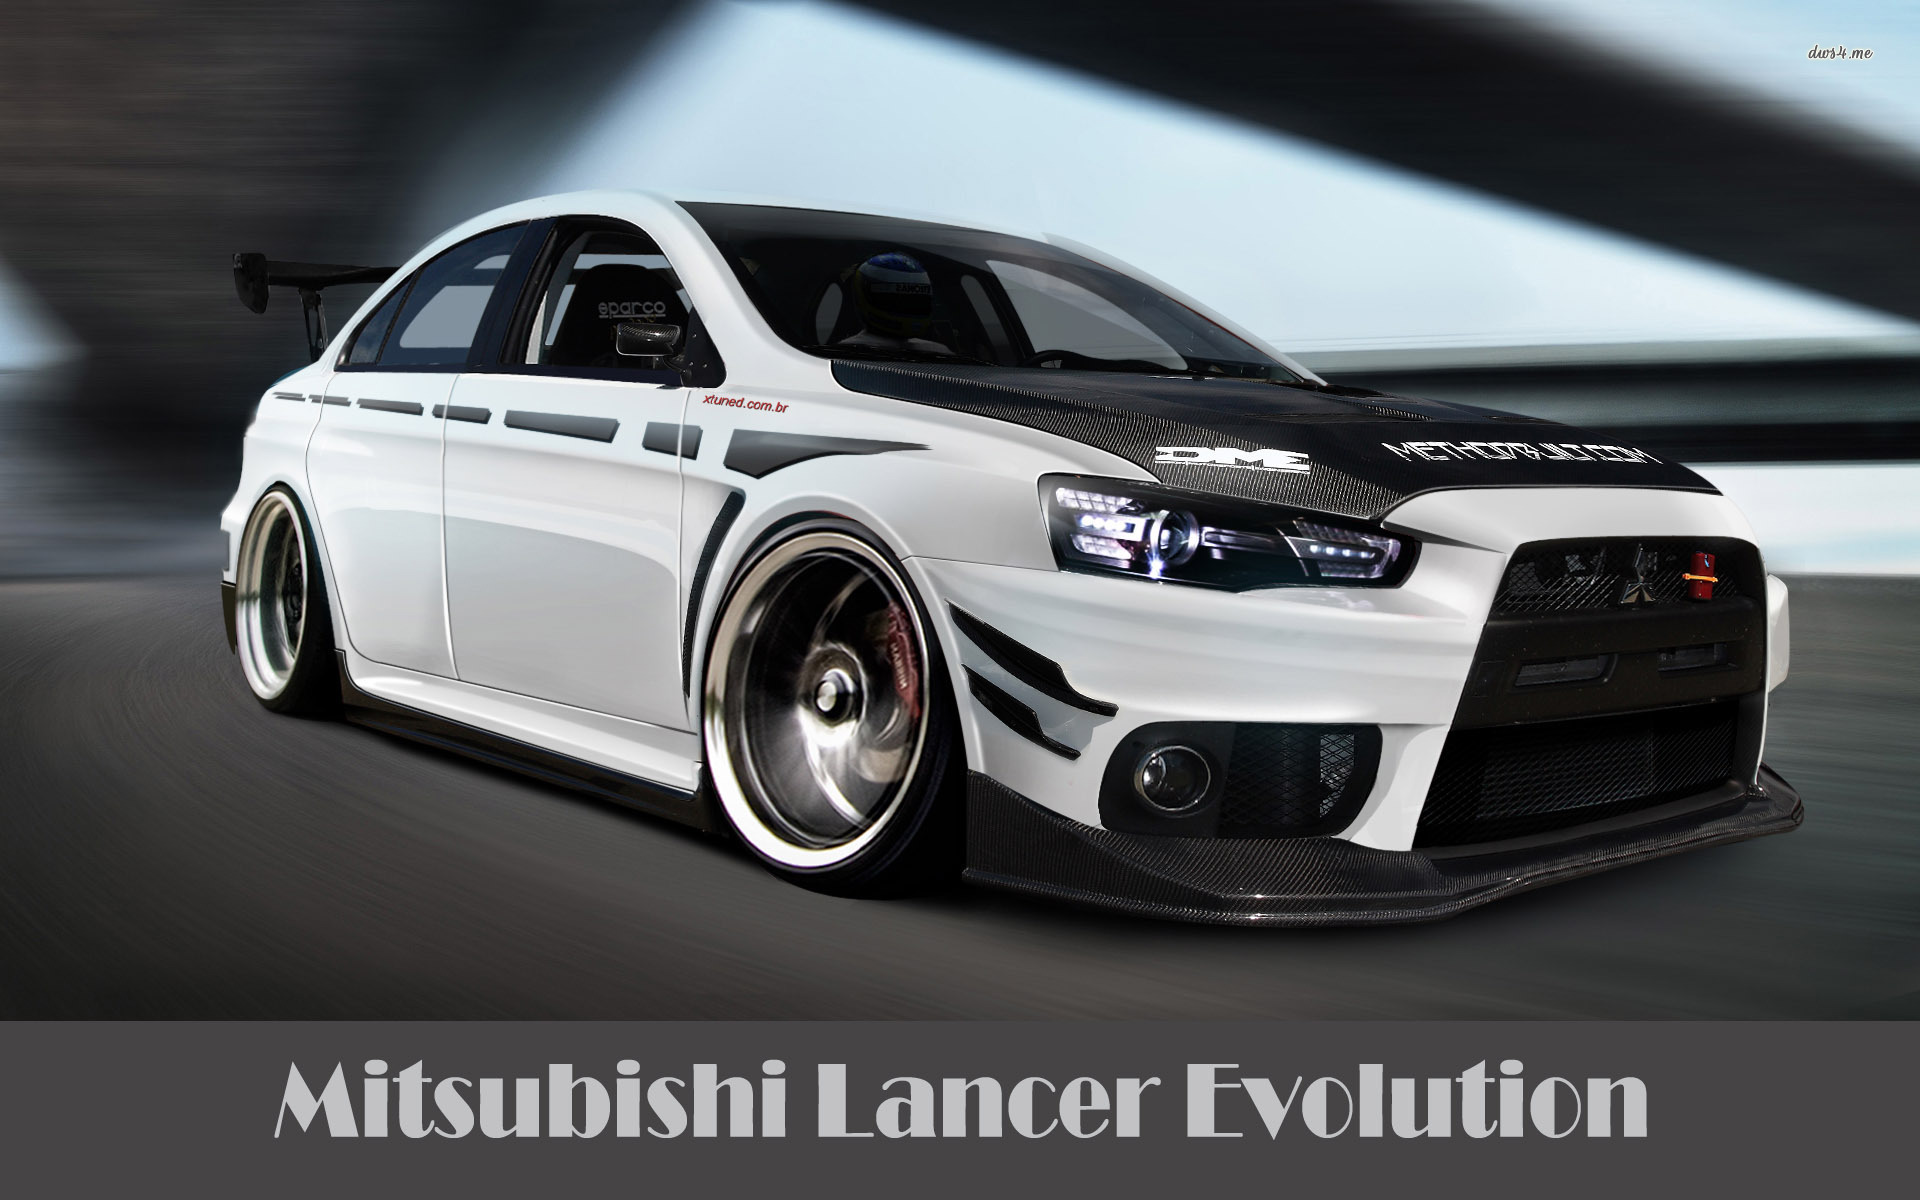 Black Mitsubishi Lancer Evo X Cars Wallpaper